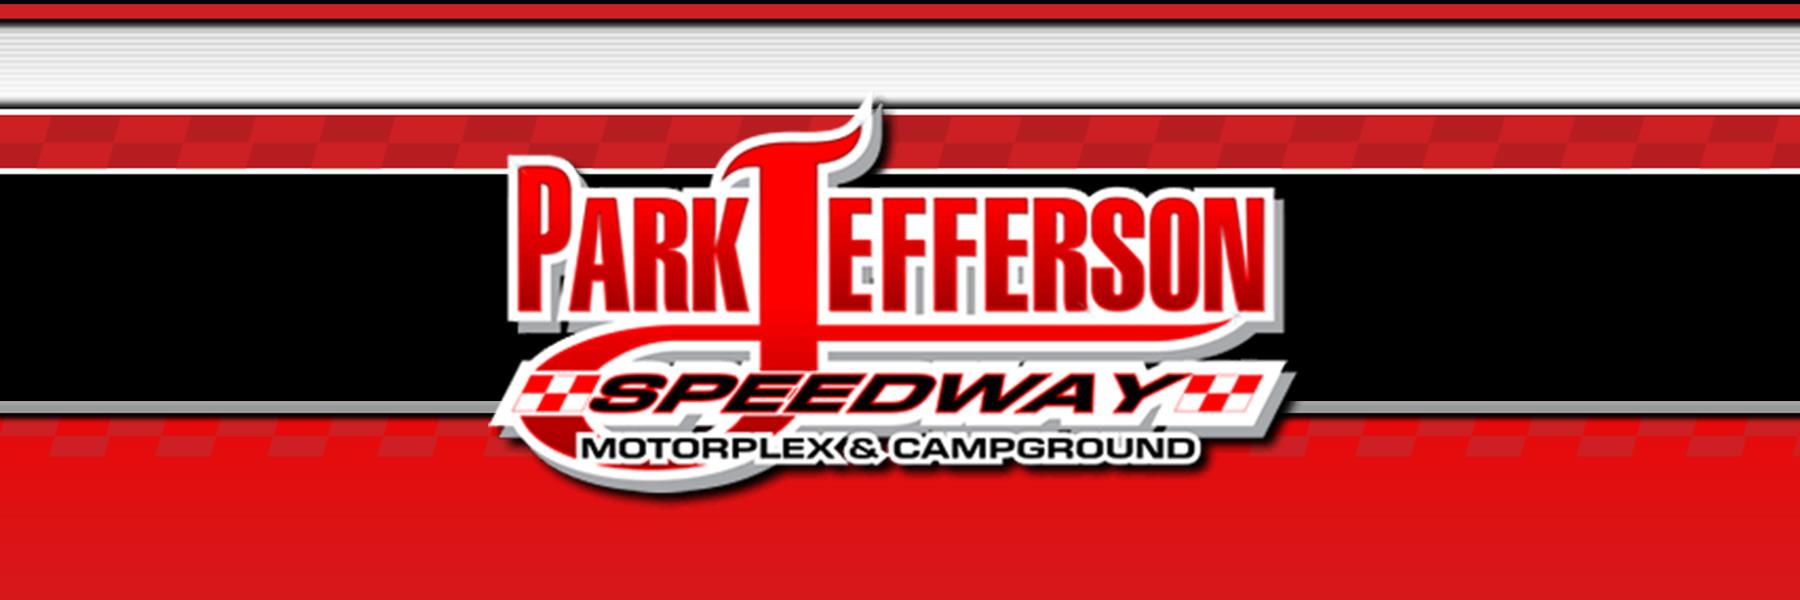 10/15/2022 - Park Jefferson International Speedway